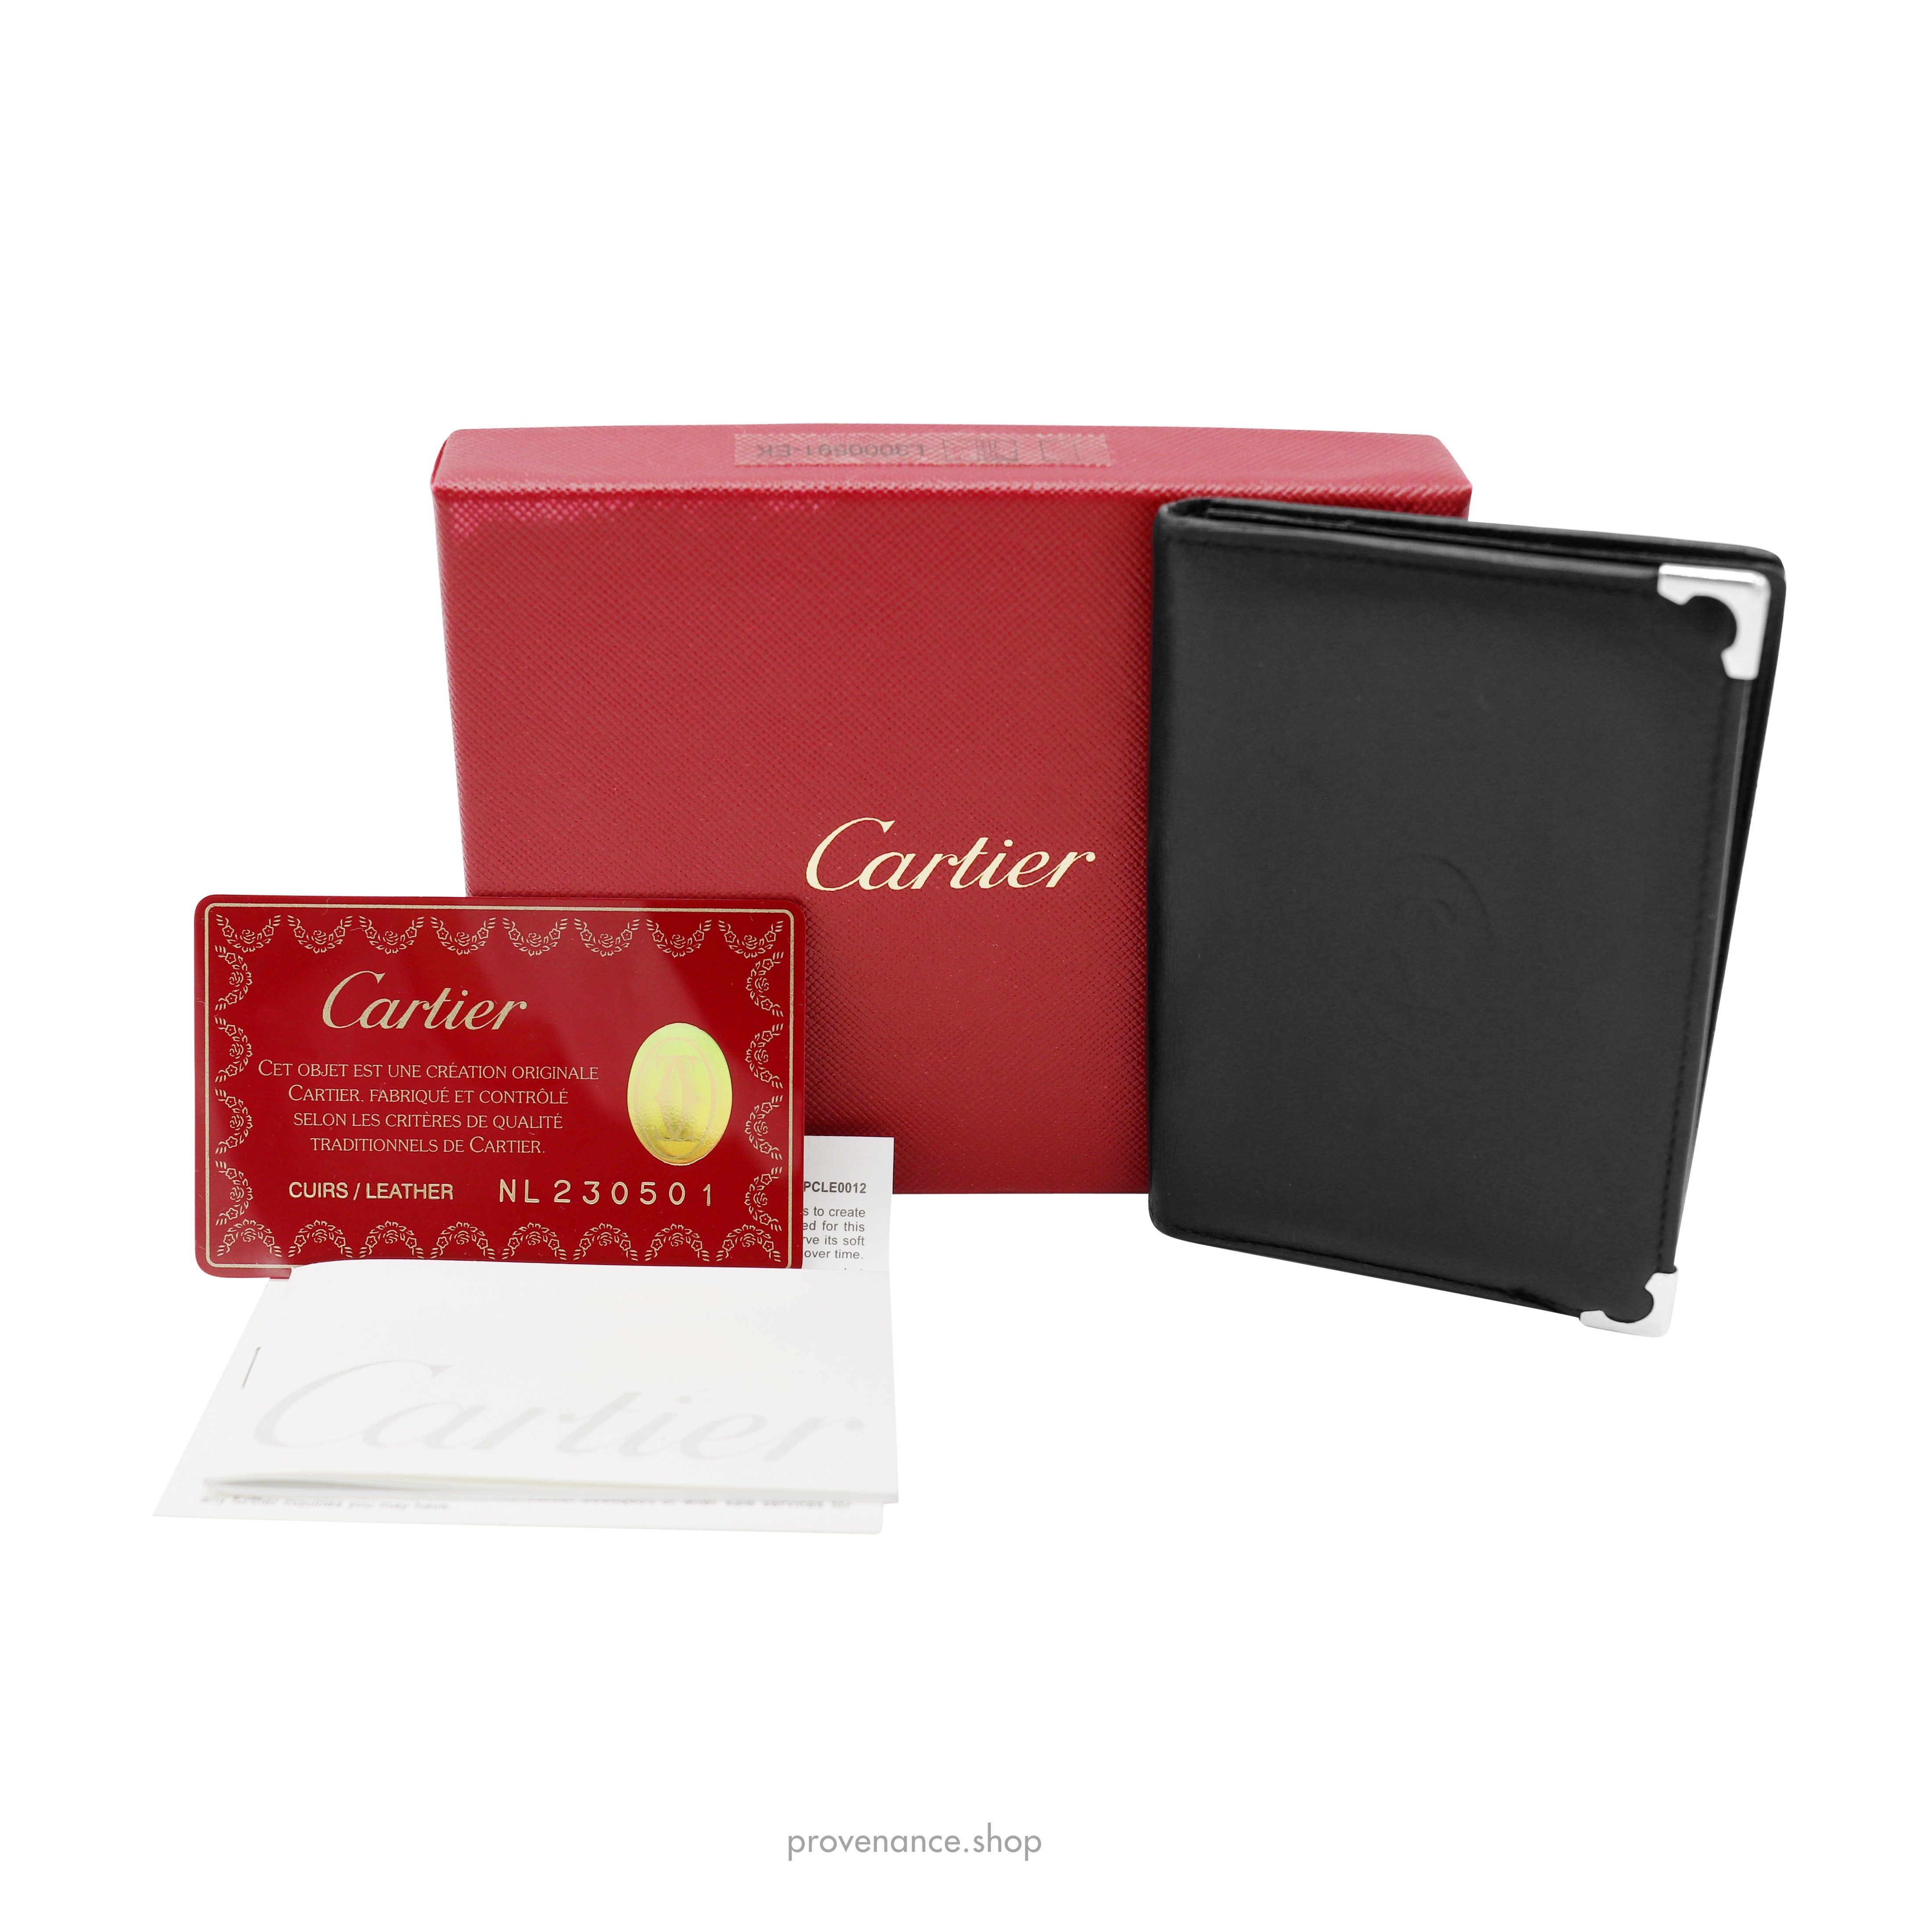 Pocket Organizer Wallet - Black & Burgundy Leather - 2